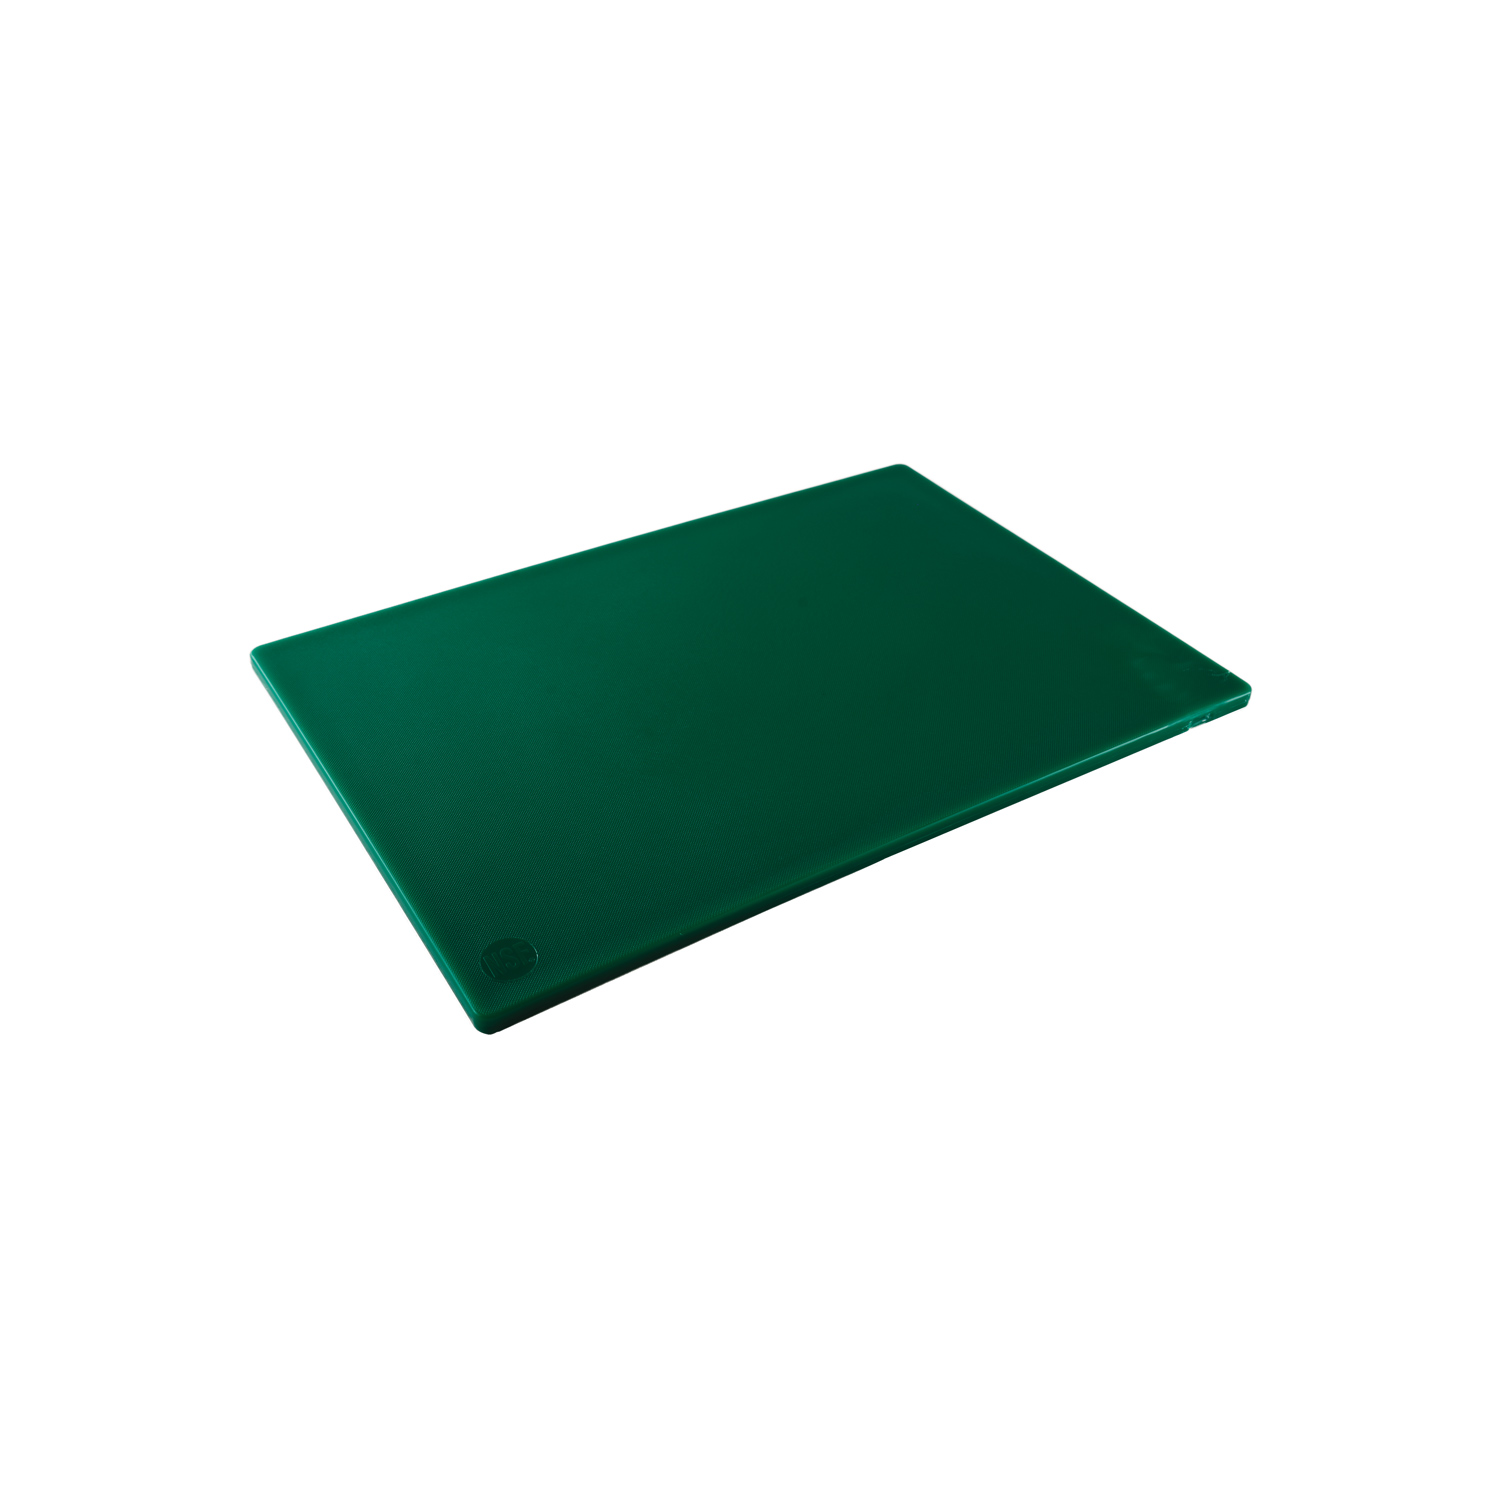 CAC China CBPH-1824G Reversible Green Plastic Cutting Board 24" x 18"